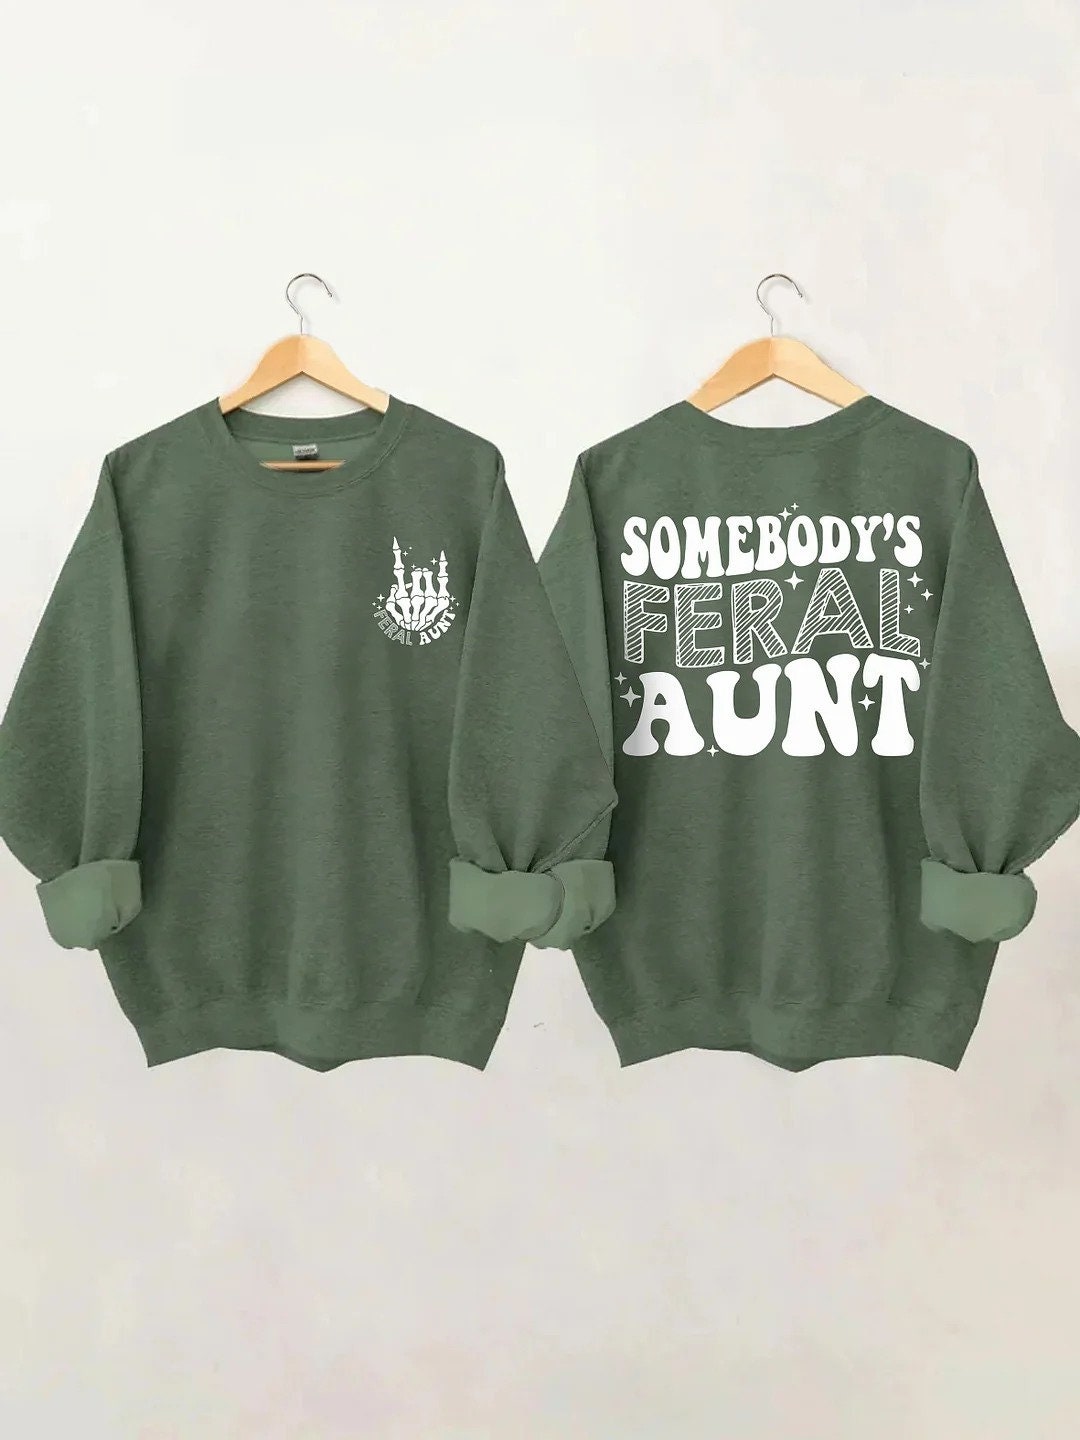 Cool Aunt Casual Sweatshirt